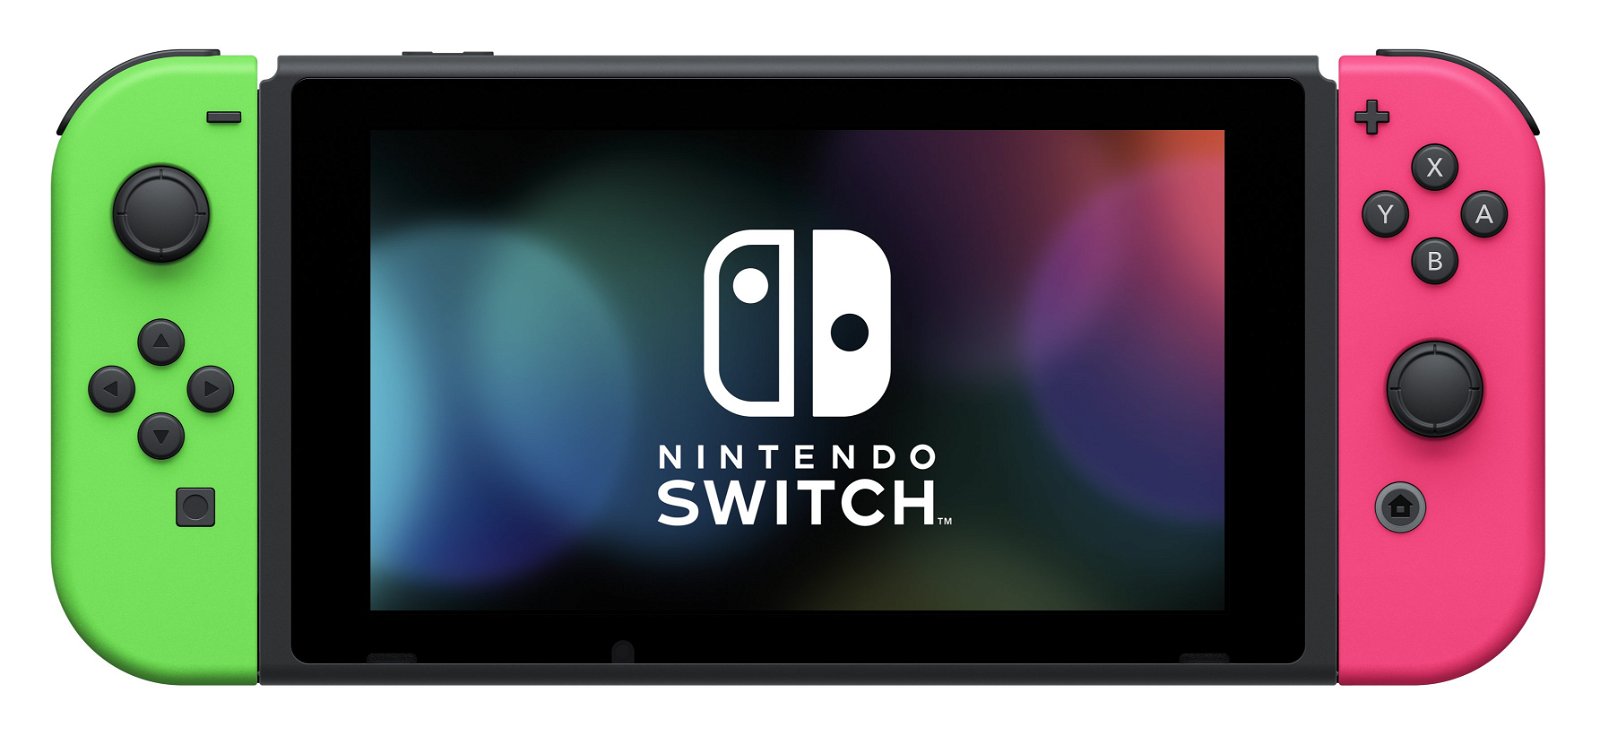 Nintendo Switch Splatoon 2 Joy-Cons - The Outerhaven